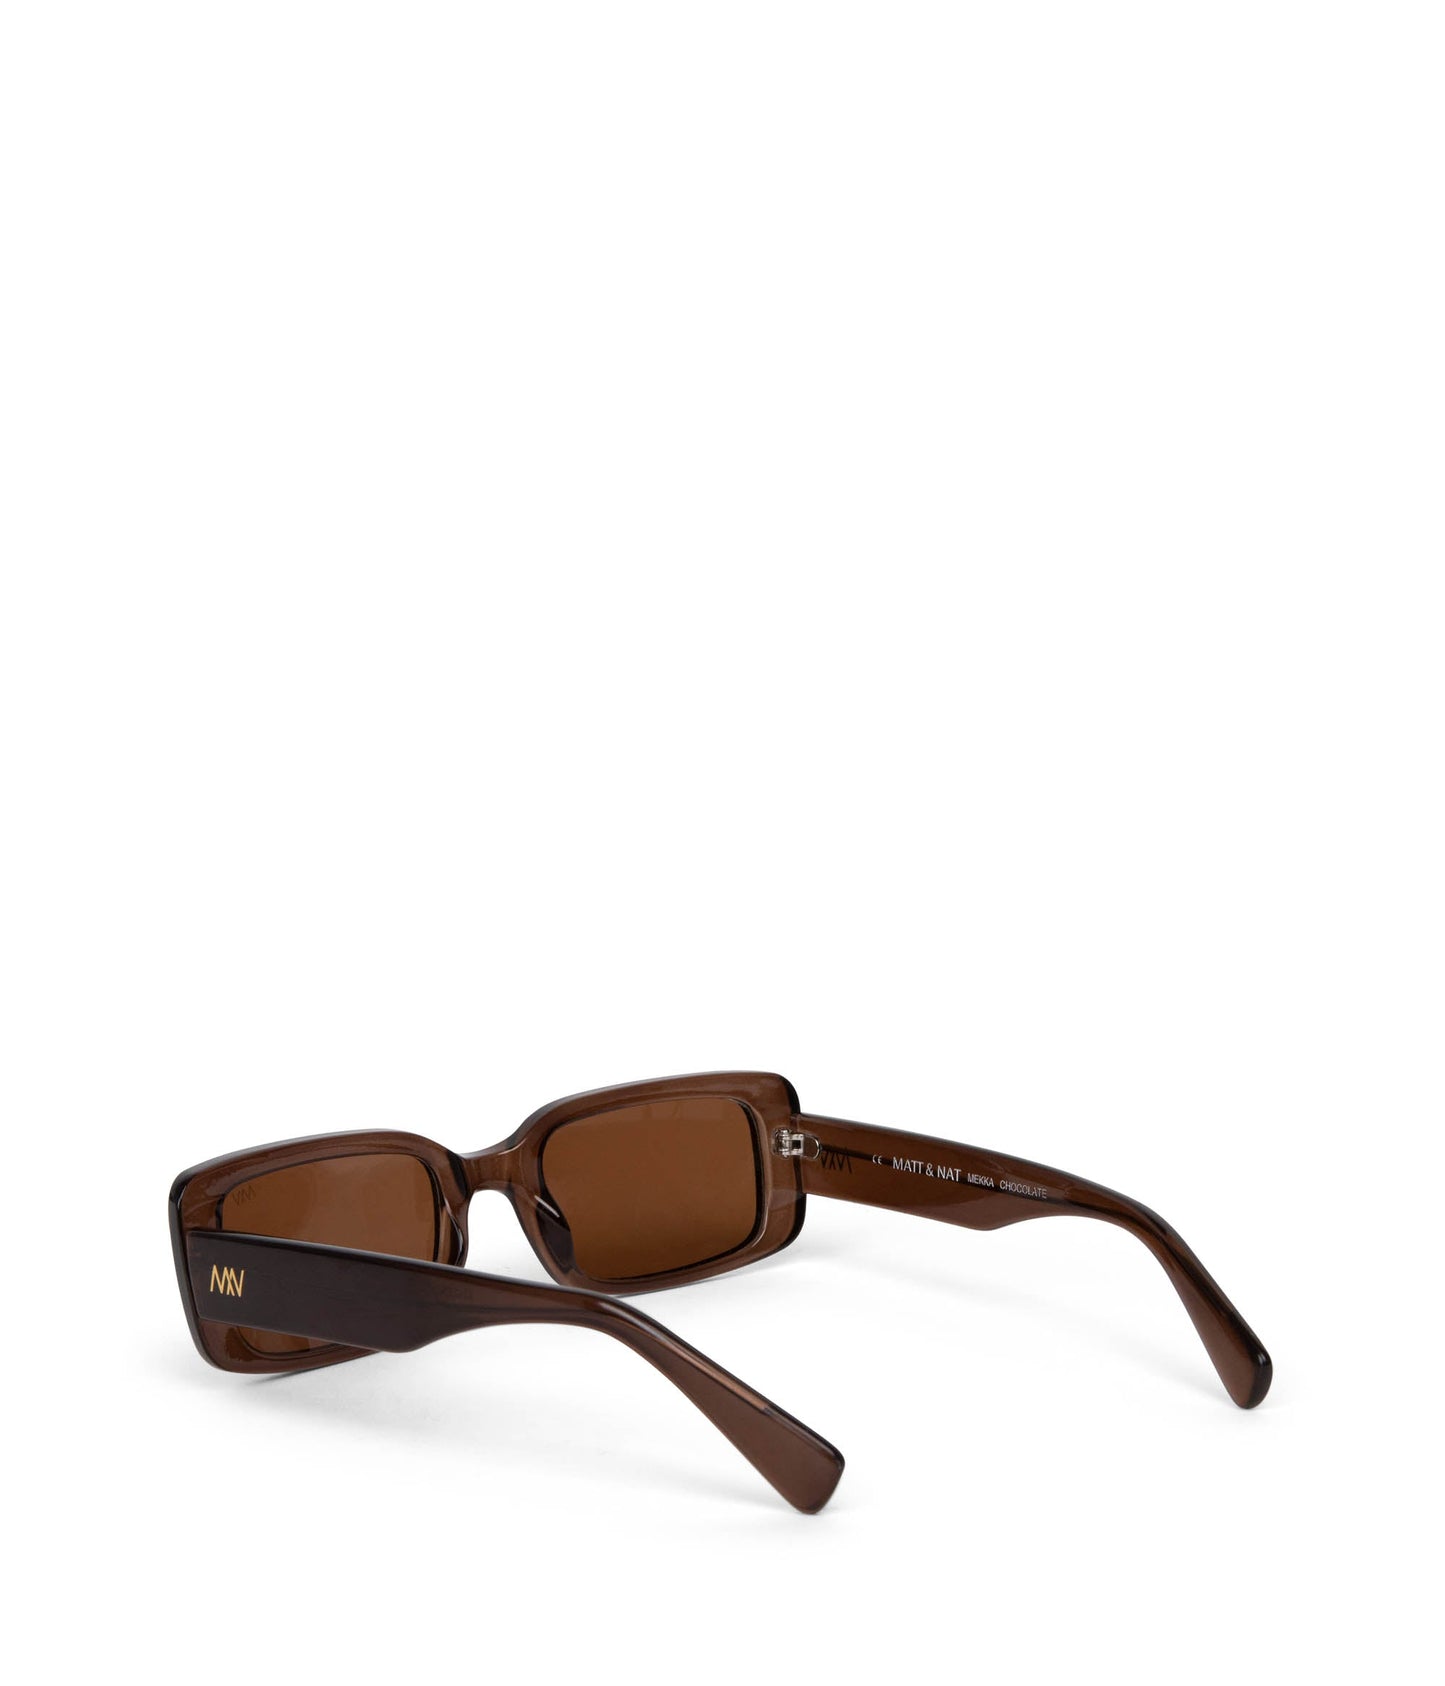 MEEKA Sunglasses | Color: Brown - variant::chocolate